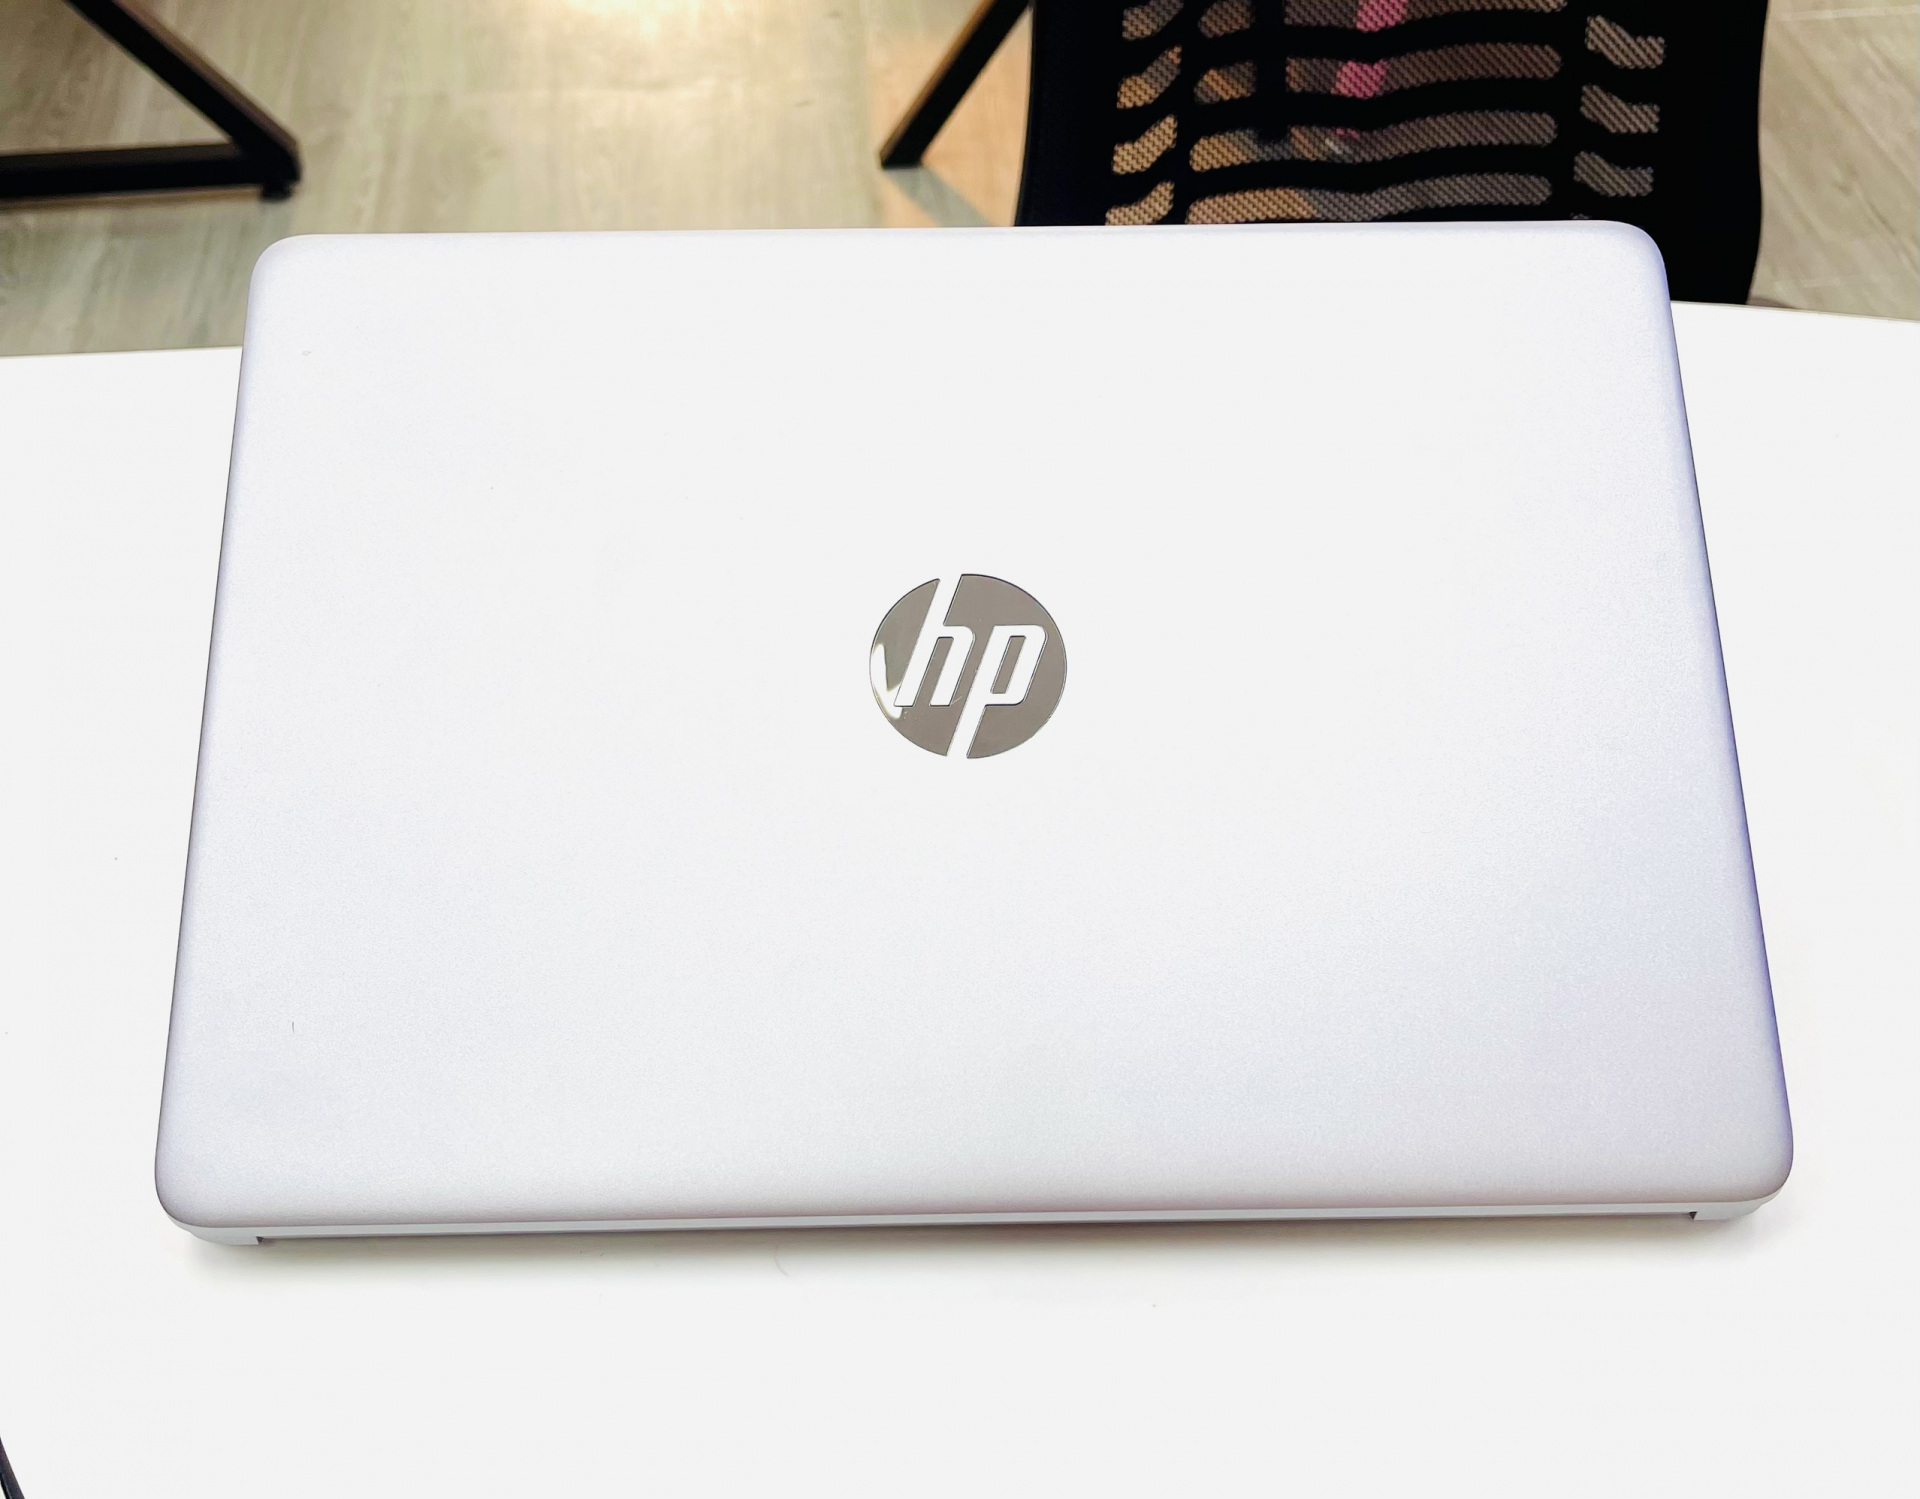  Laptop i9 32gb ram, 1tb ssd HP